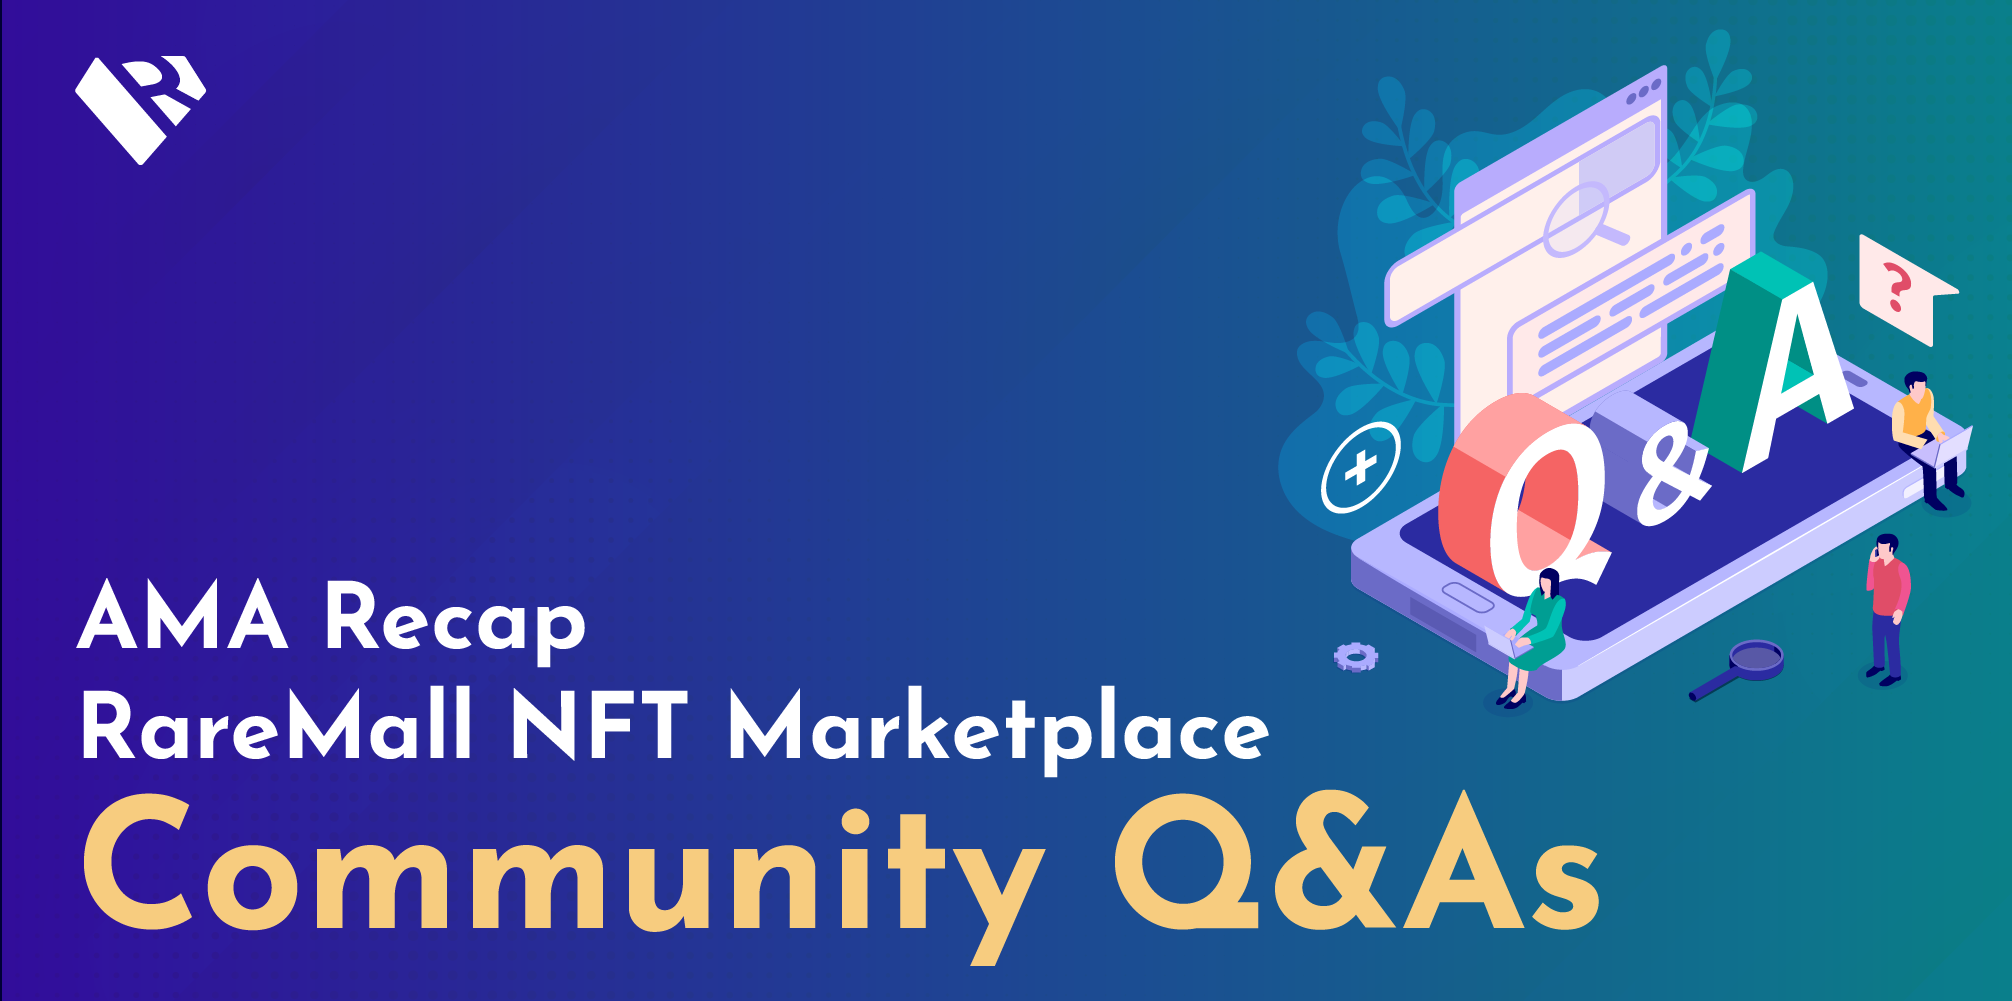 AMA Recap: RareMall NFT Marketplace| Community Q&As